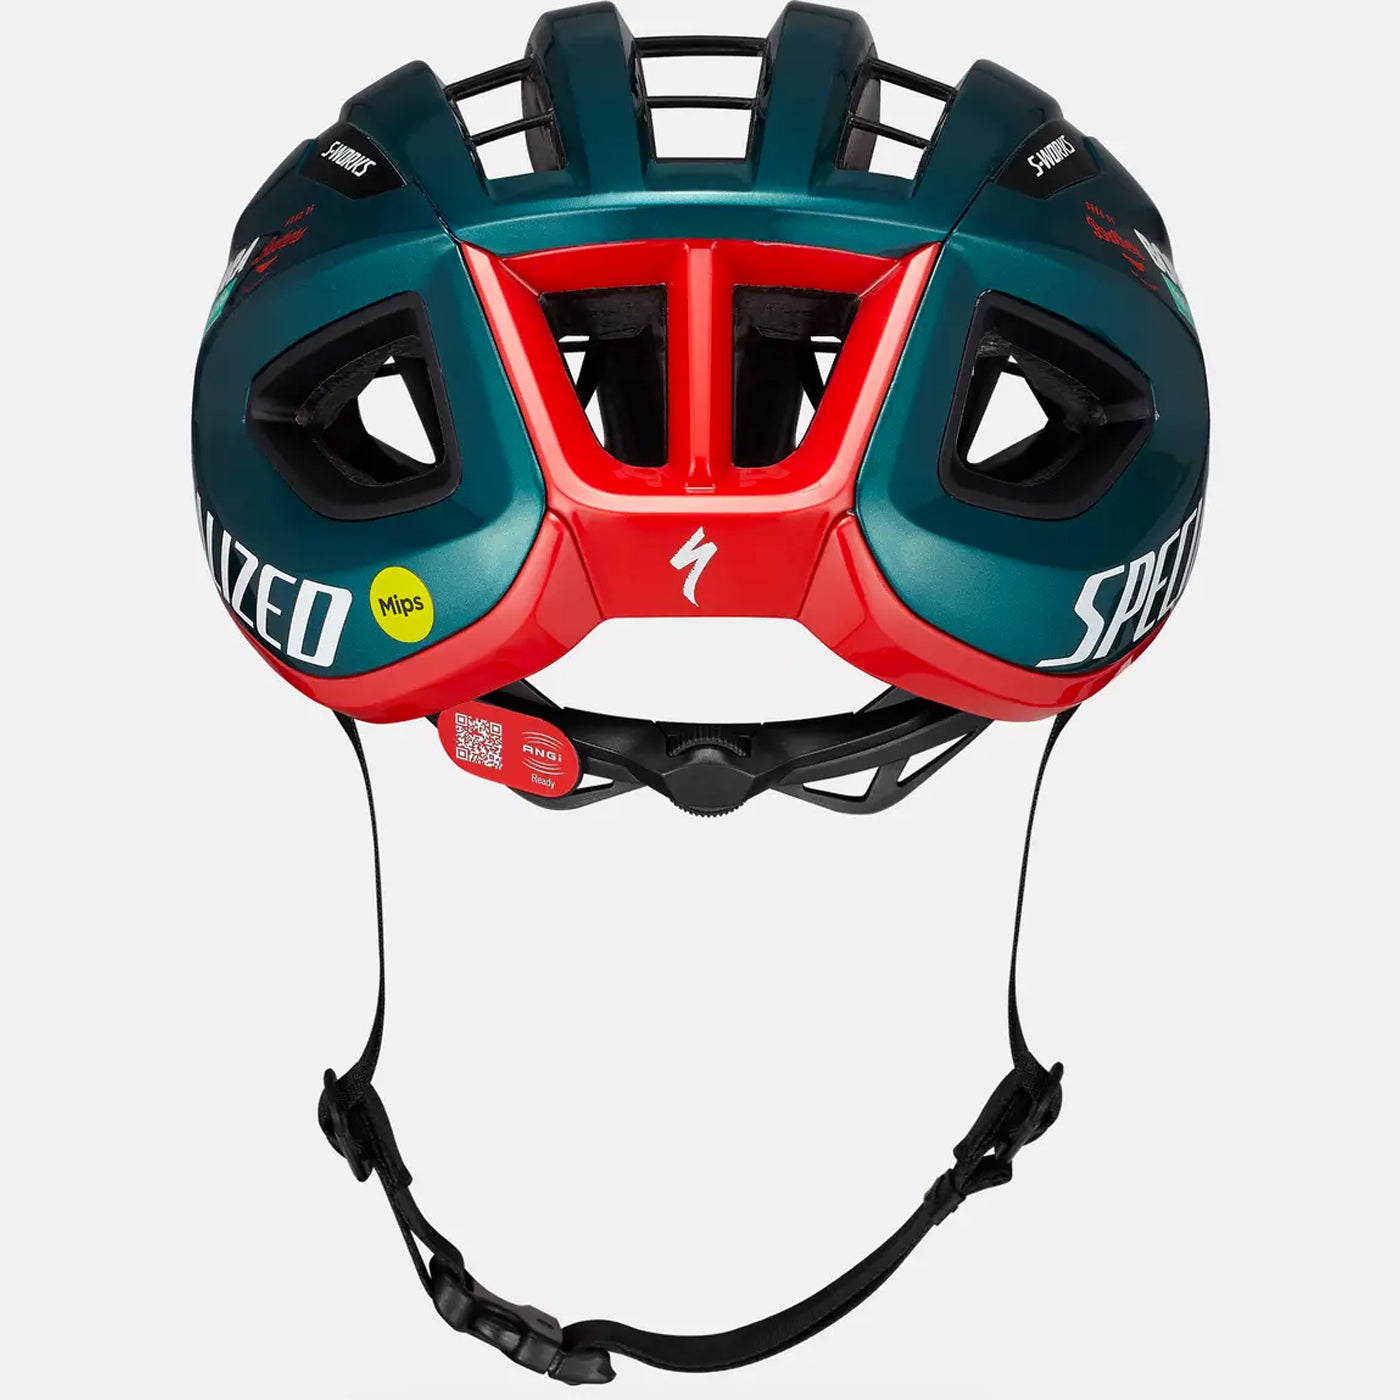 Specialized Prevail 3 helmet - Bora Hansgrohe